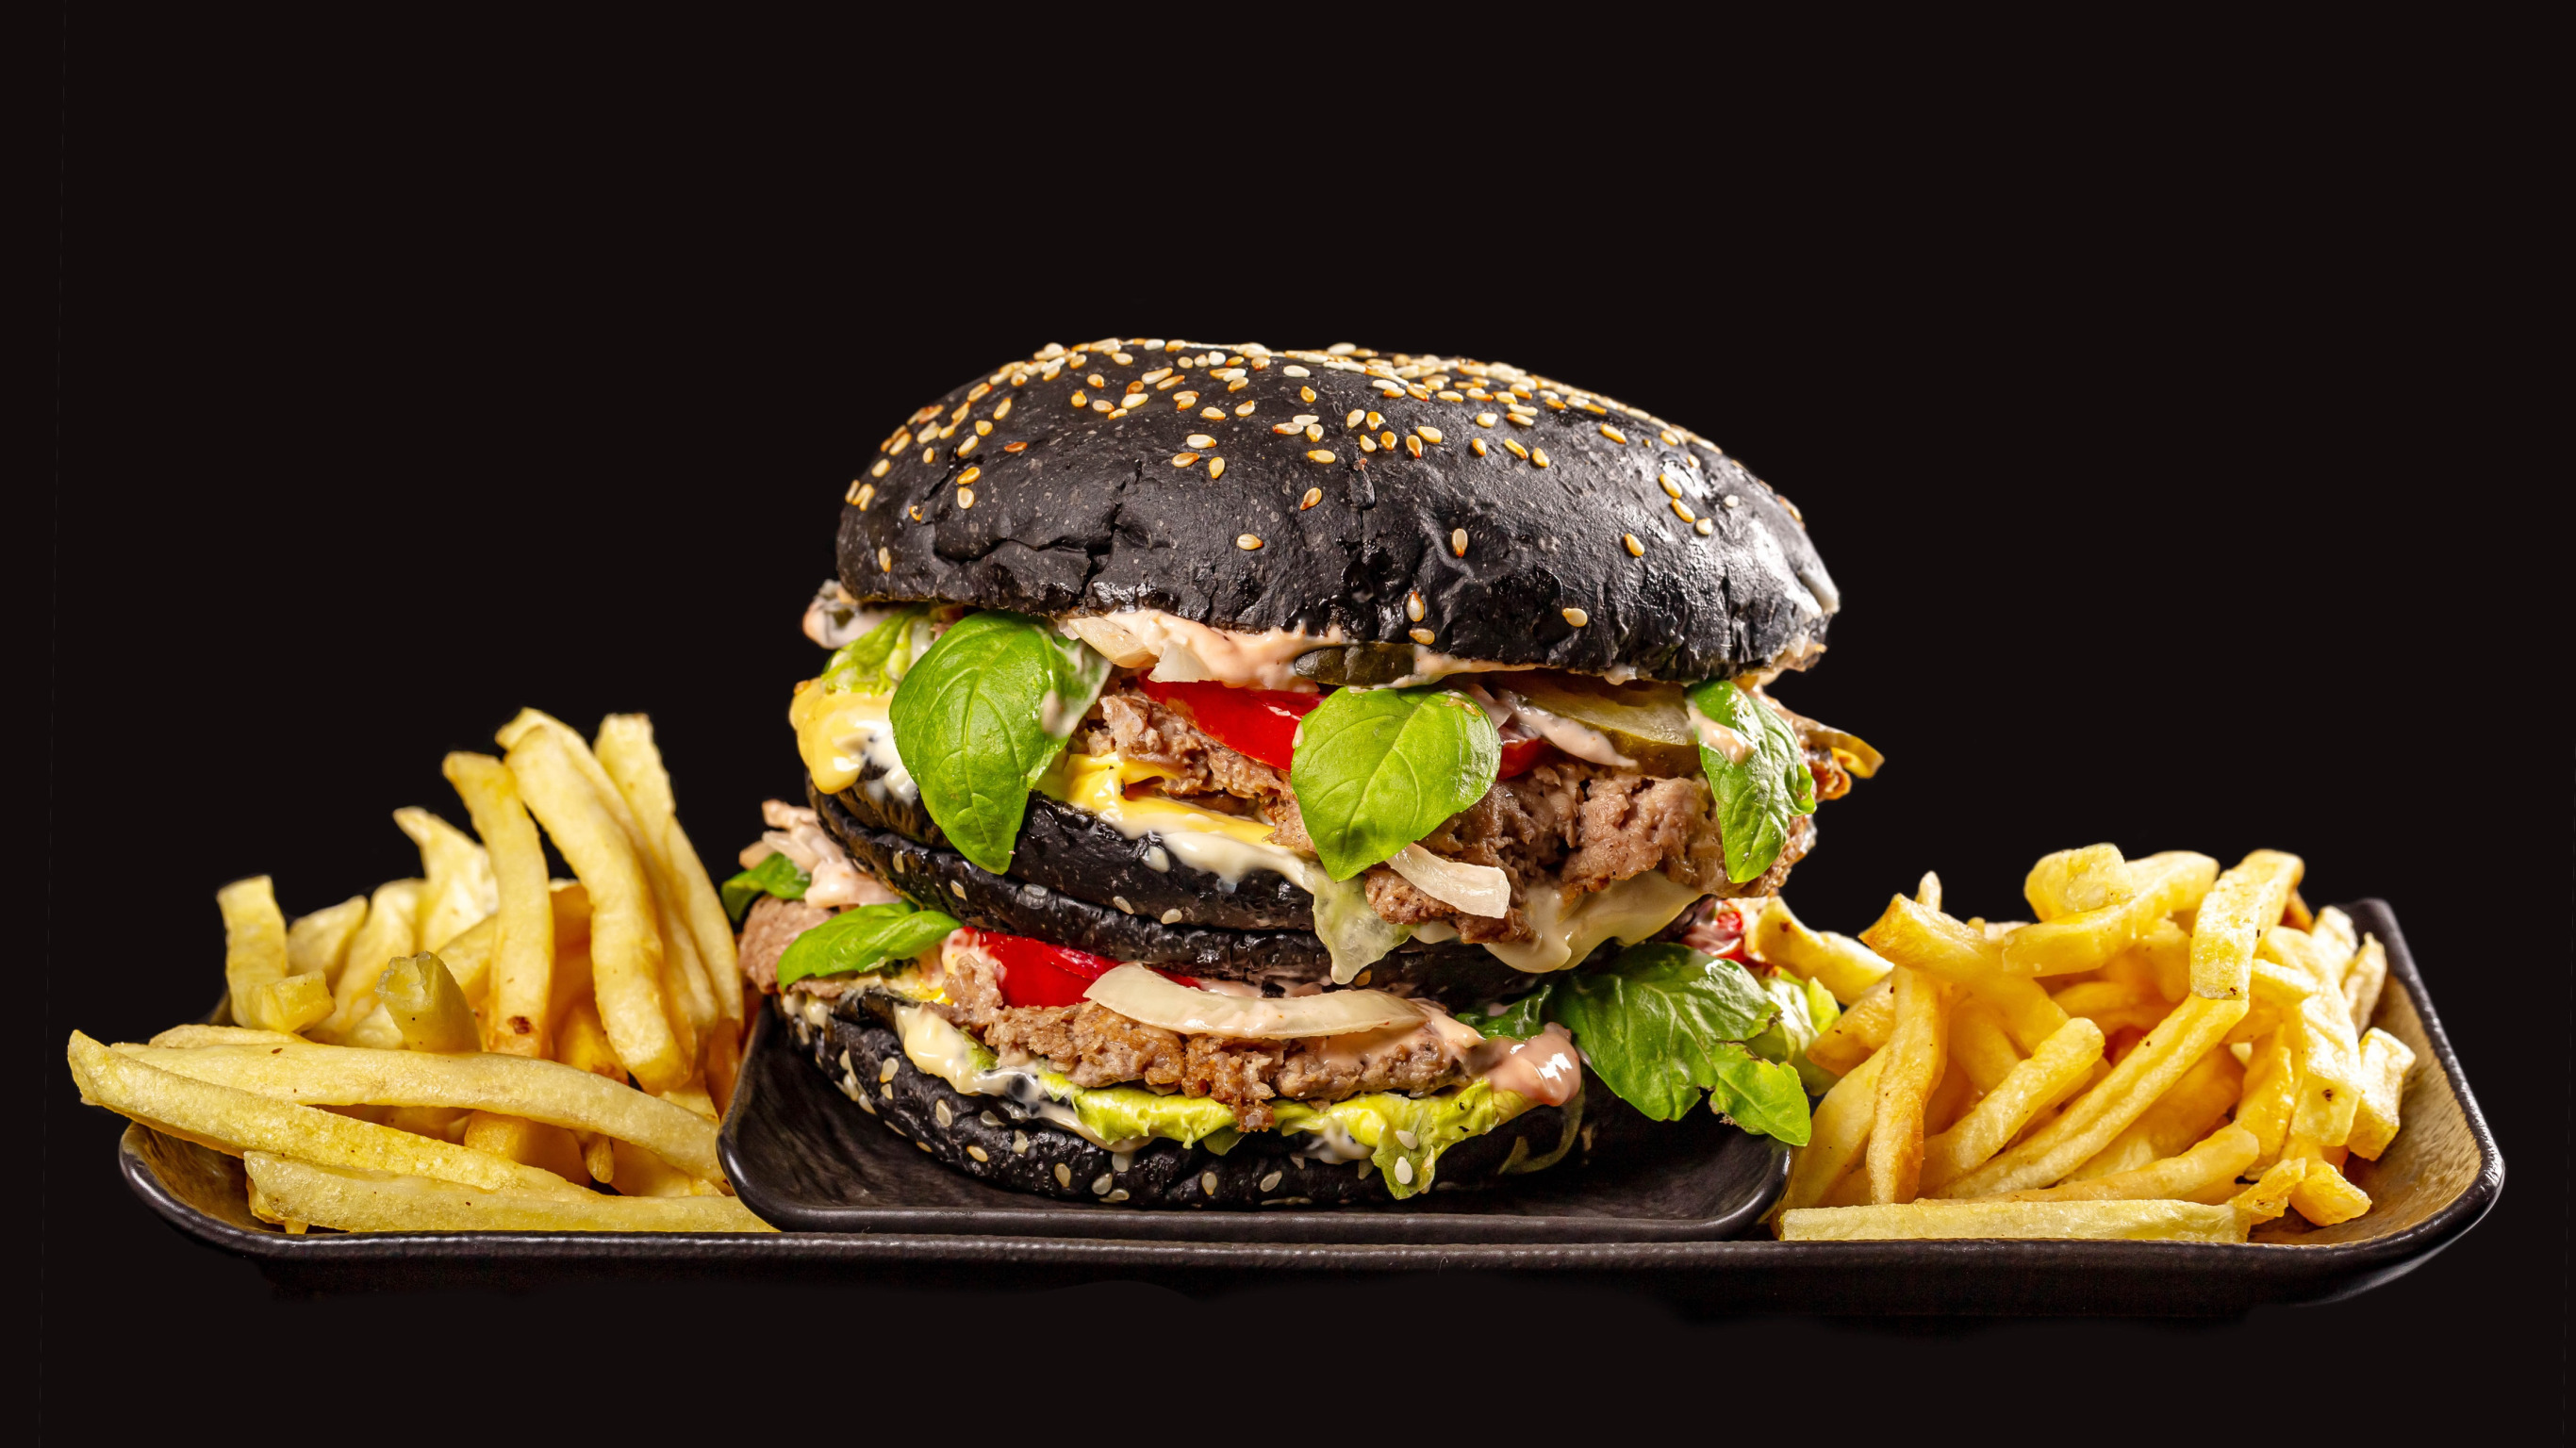 Черный бургер. Бургер на черном фоне. Сочные бургеры. 4 гамбургера